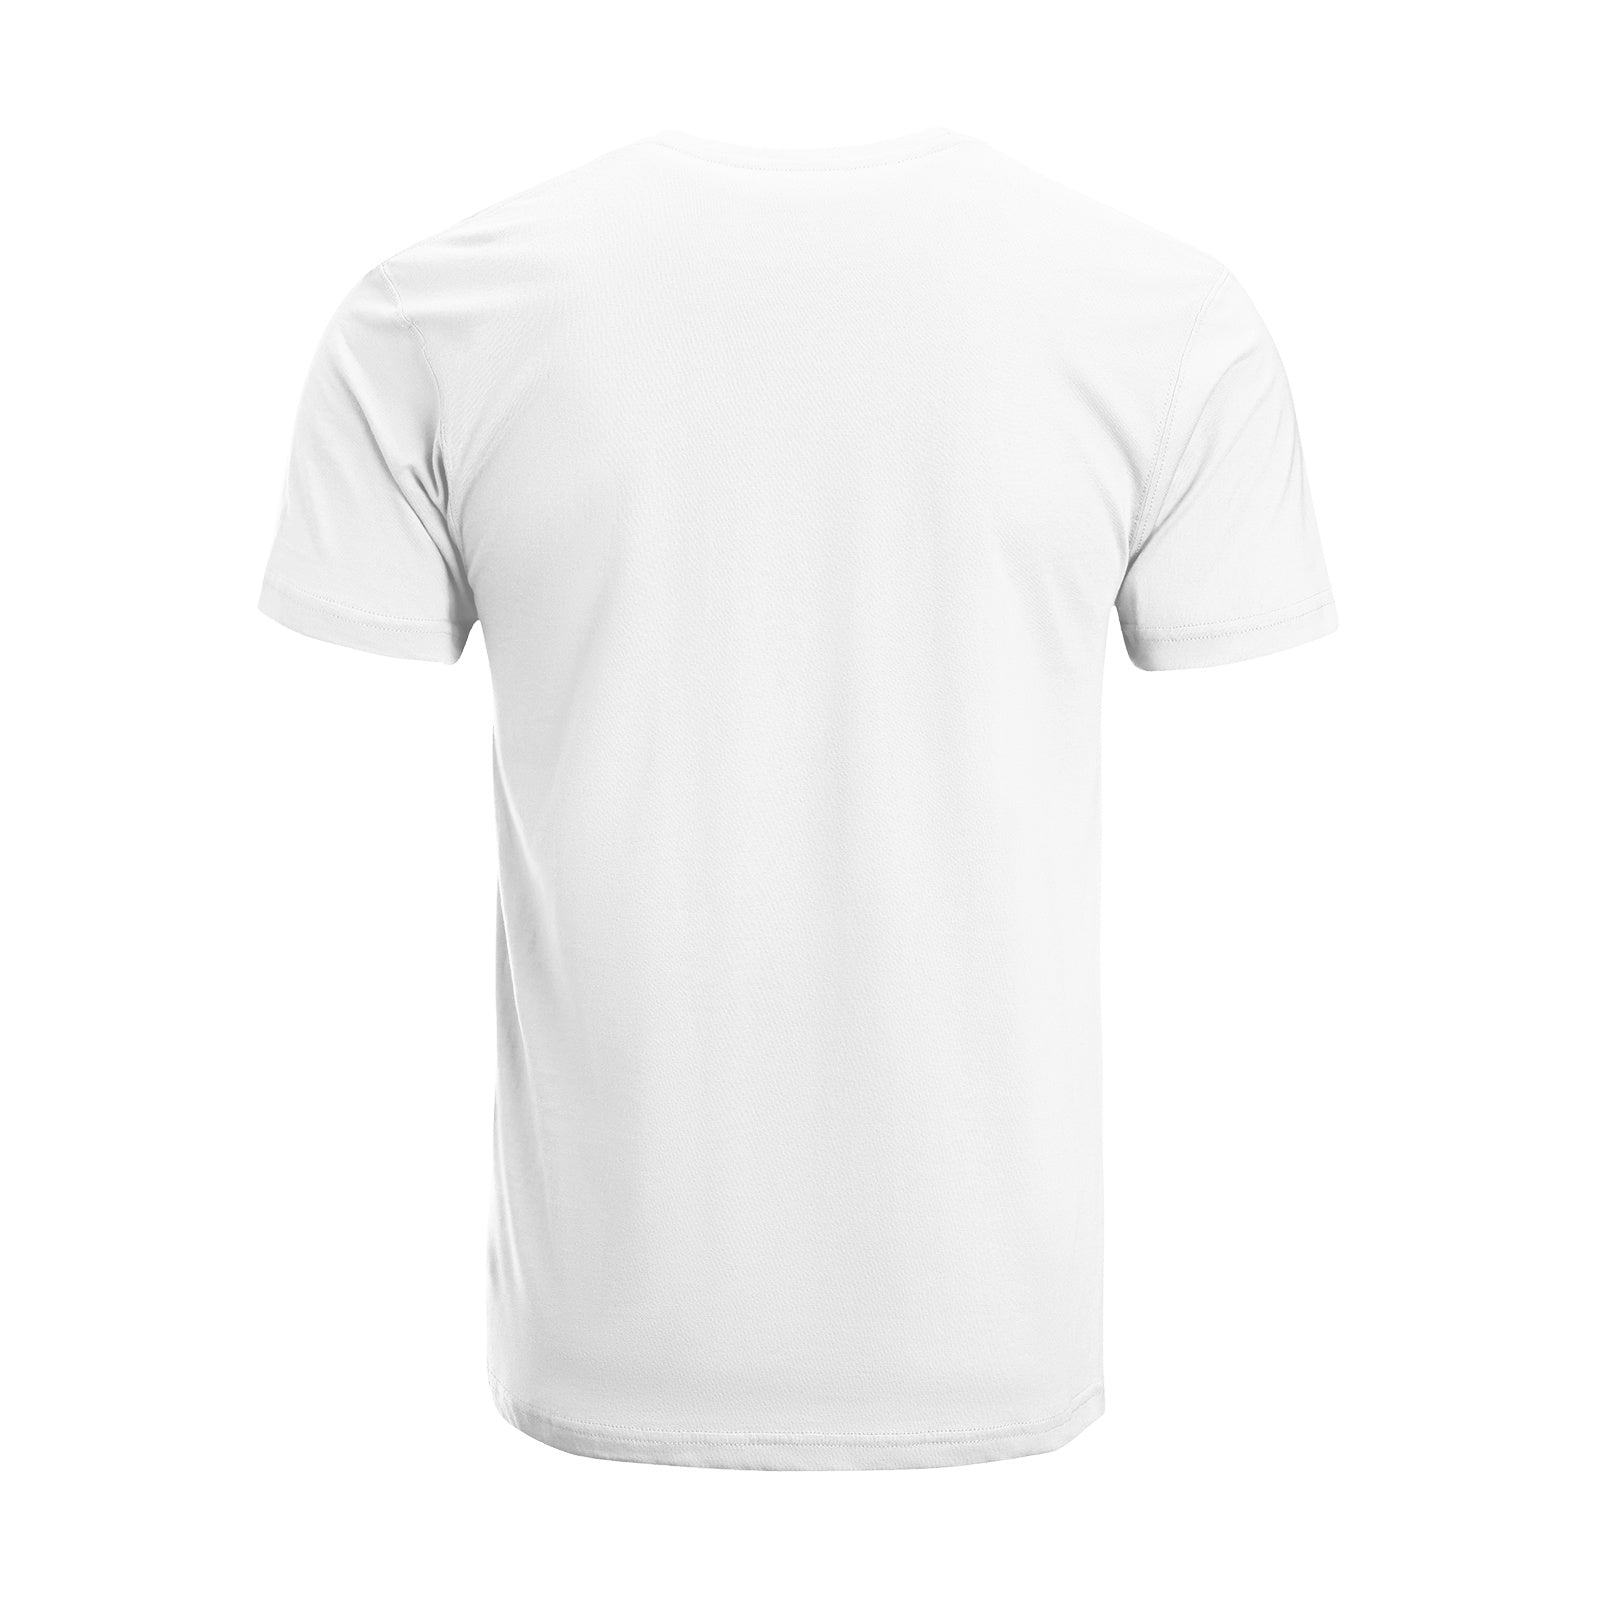 Unisex Short Sleeve Crew Neck Cotton Jersey T-Shirt CAT 09 - Tara-Outfits.com